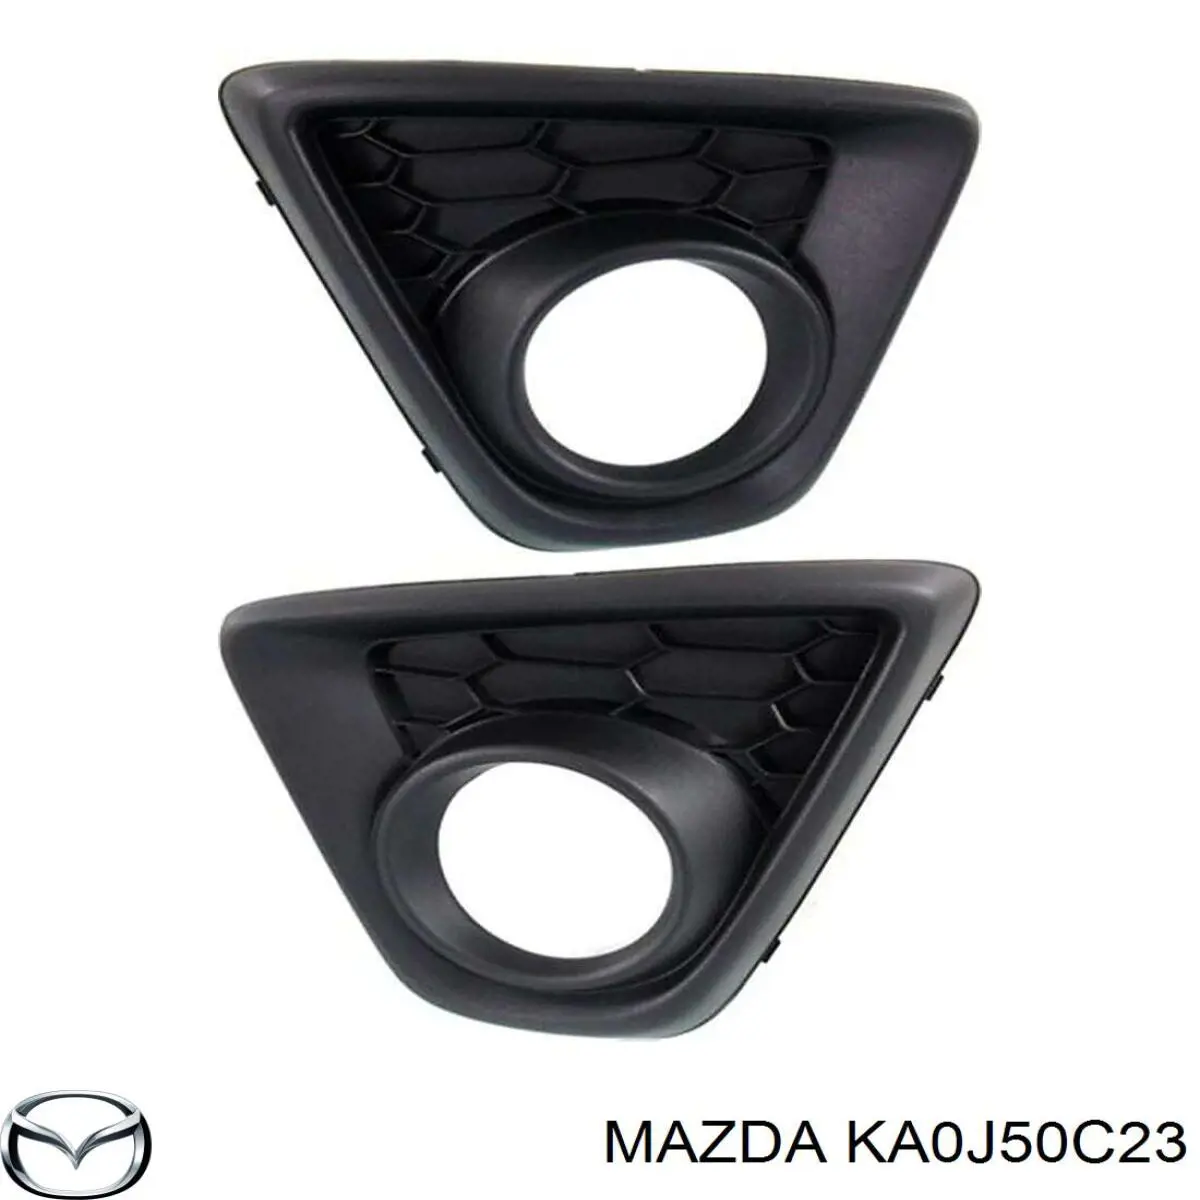 KA0J50C23 Mazda rejilla del parachoques delantera izquierda